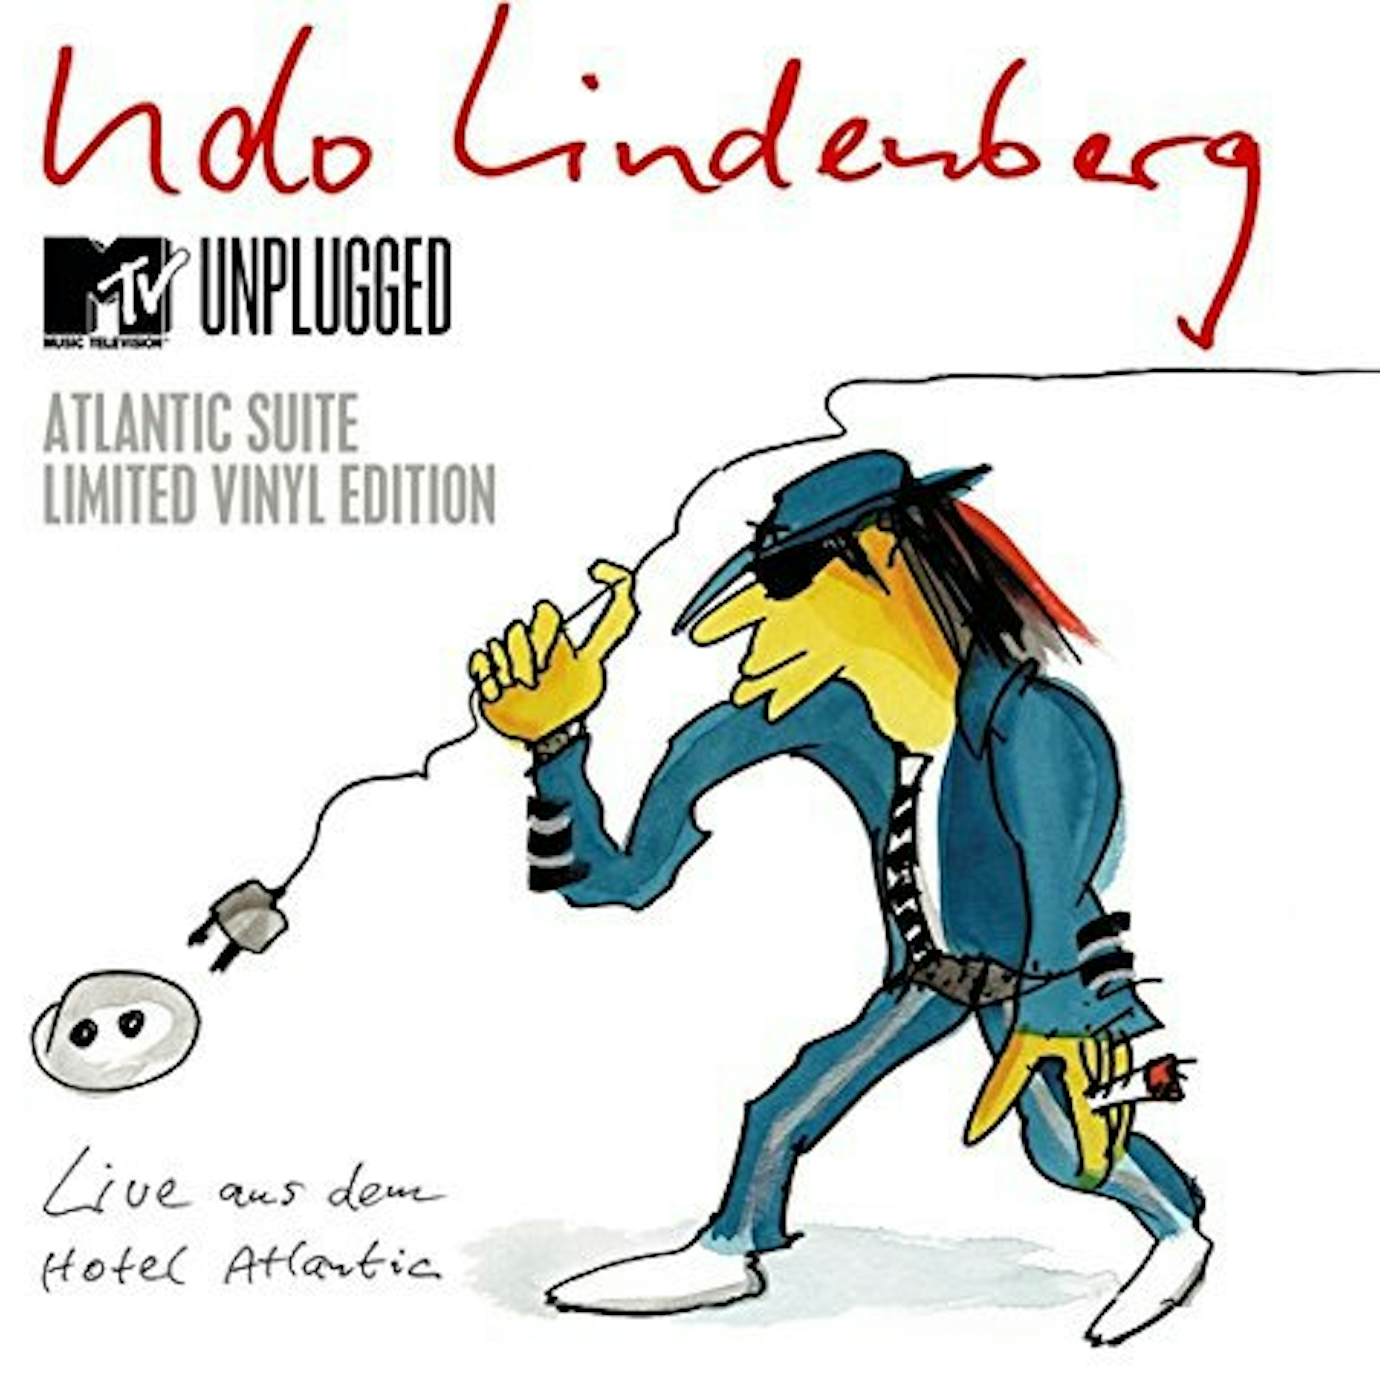 Udo Lindenberg MTV UNPLUGGED: ATLANTIC SUITE Vinyl Record